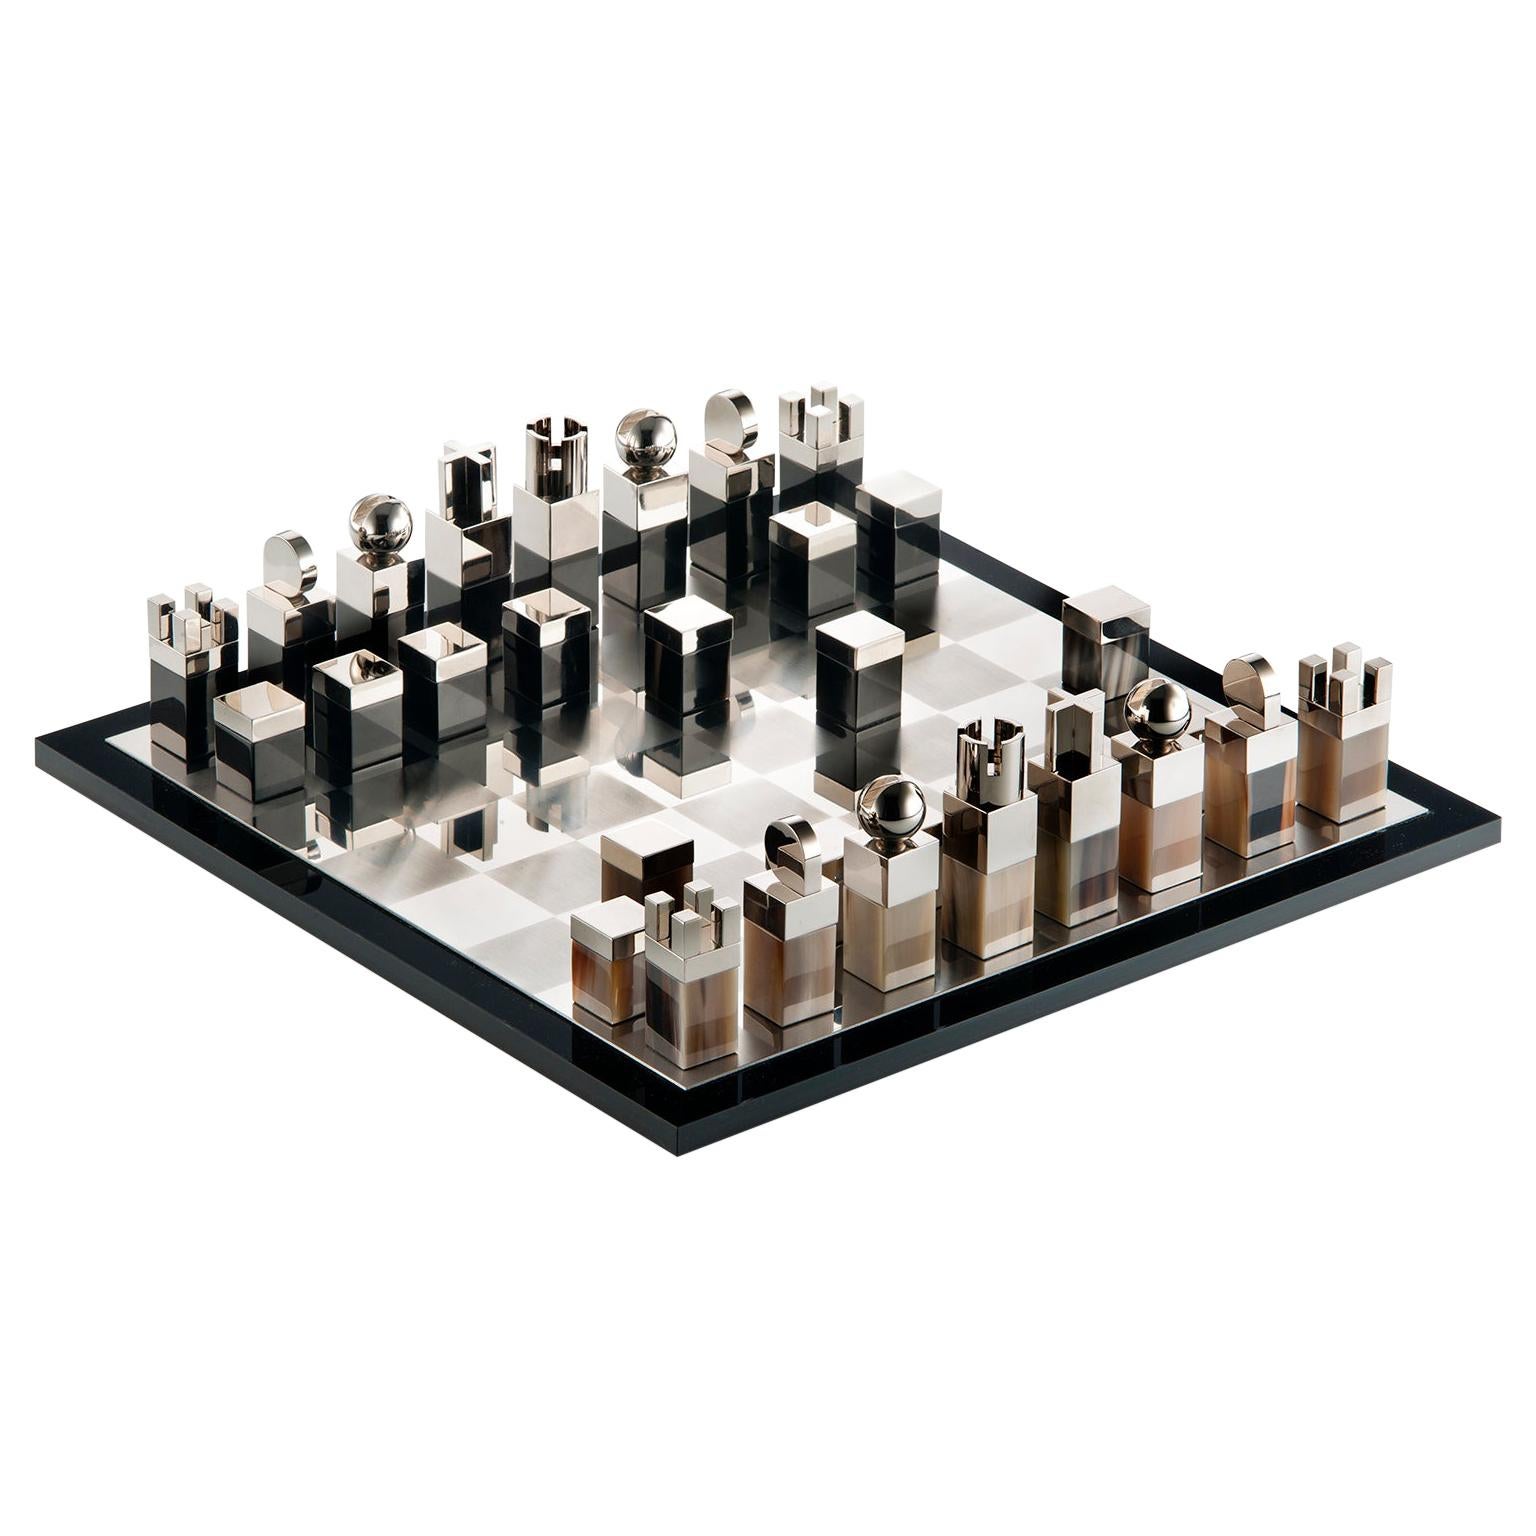 Nelson Chess Set in Corno Italiano and Palladium-Plated Brass, Mod. 3010